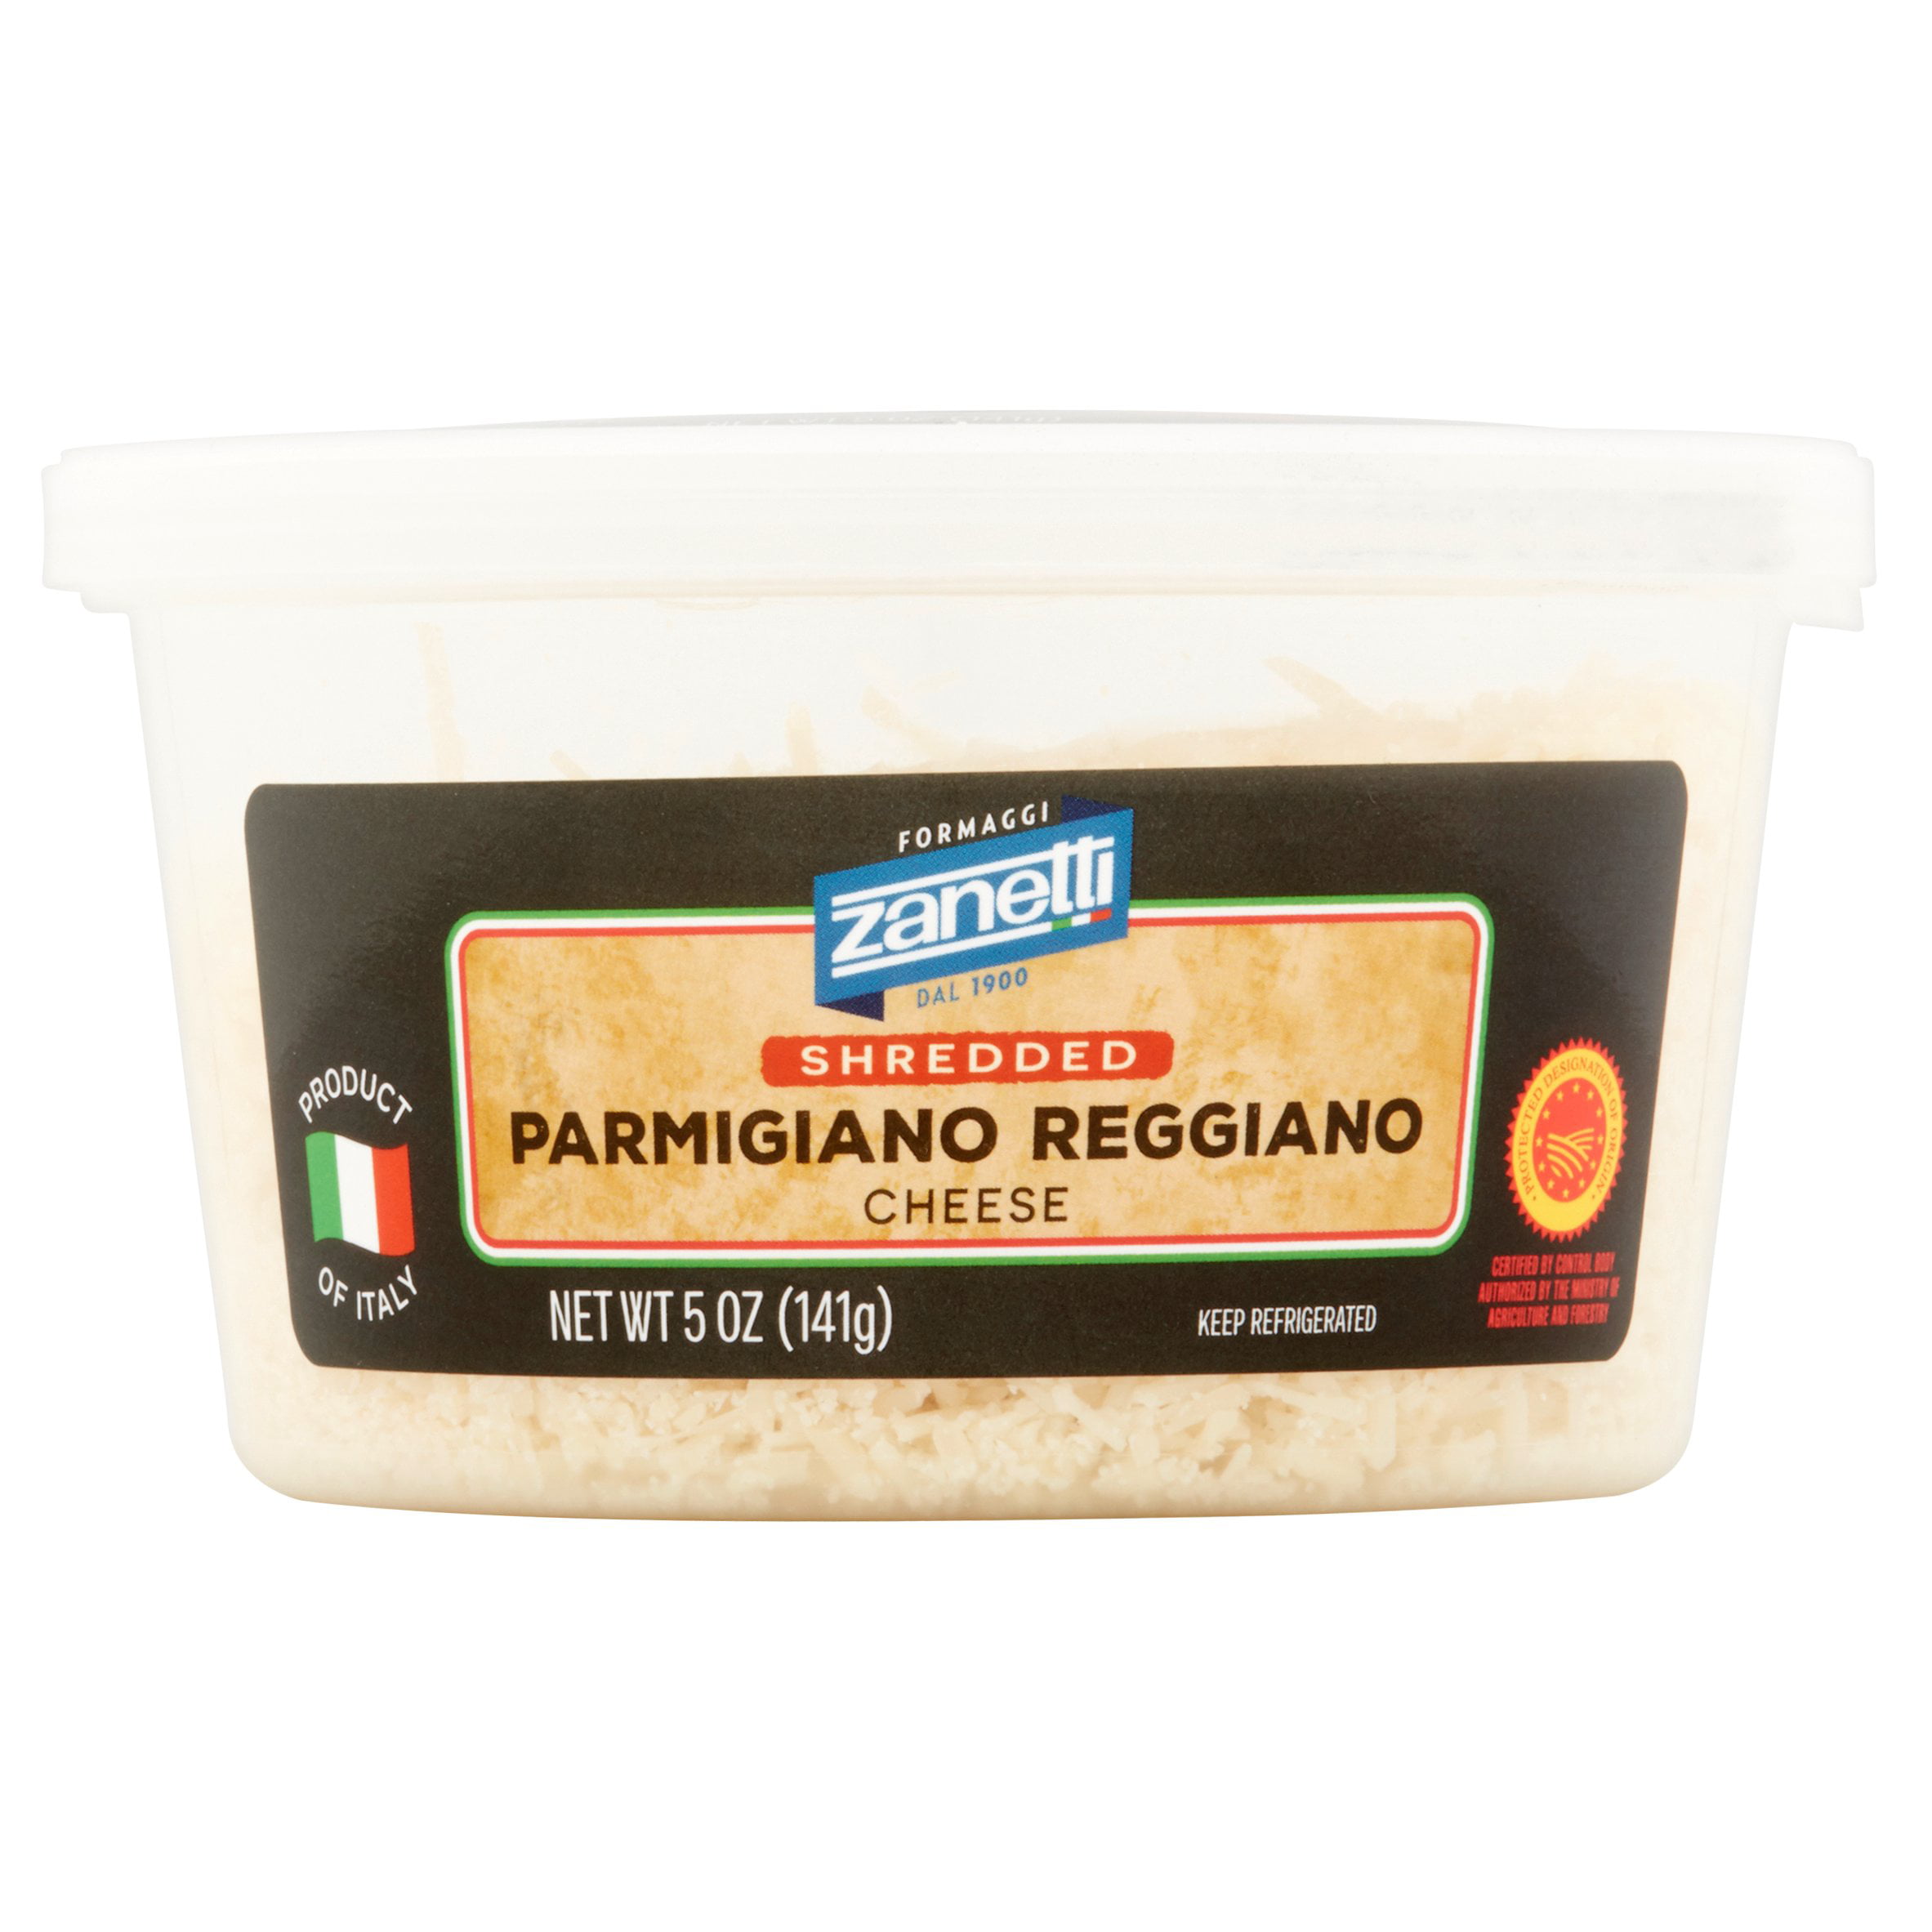 Zanetti Shredded Parmigiano Reggiano Cheese 5 Oz Walmart Com Walmart Com,Gender Neutral Colors For Baby Clothes